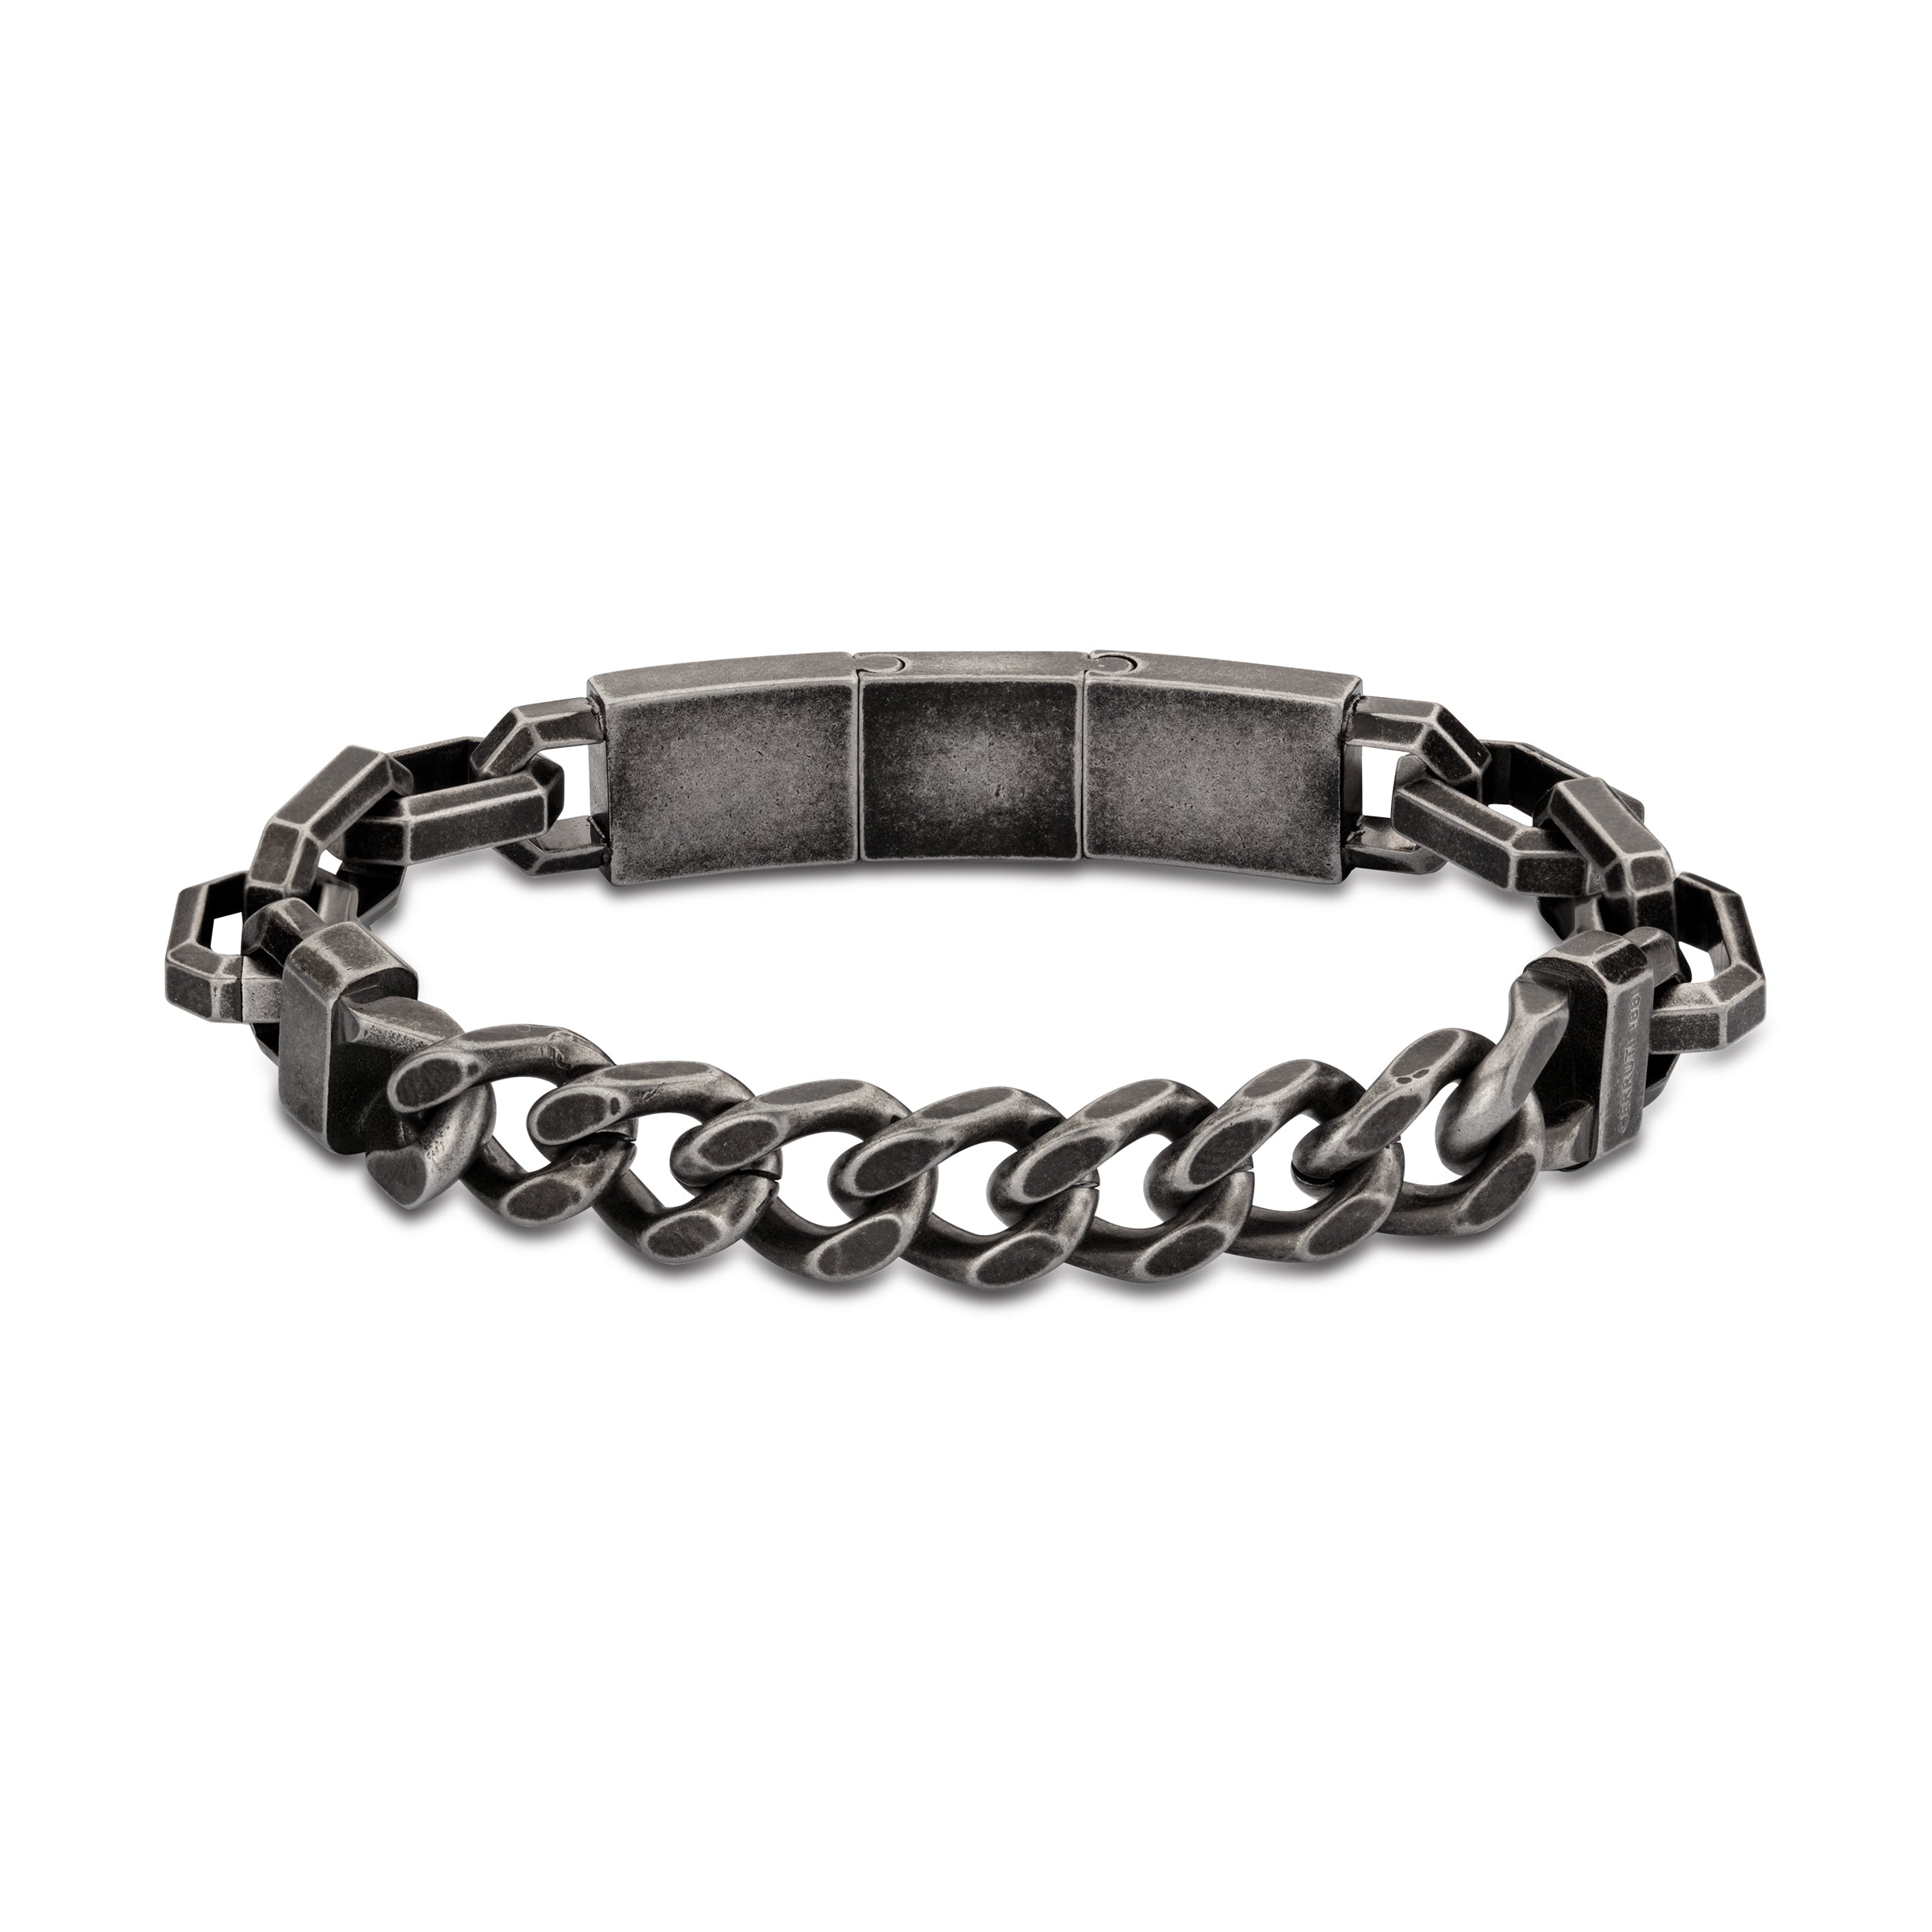 Cerruti Gray Bracelet for Men - CERBR-0009